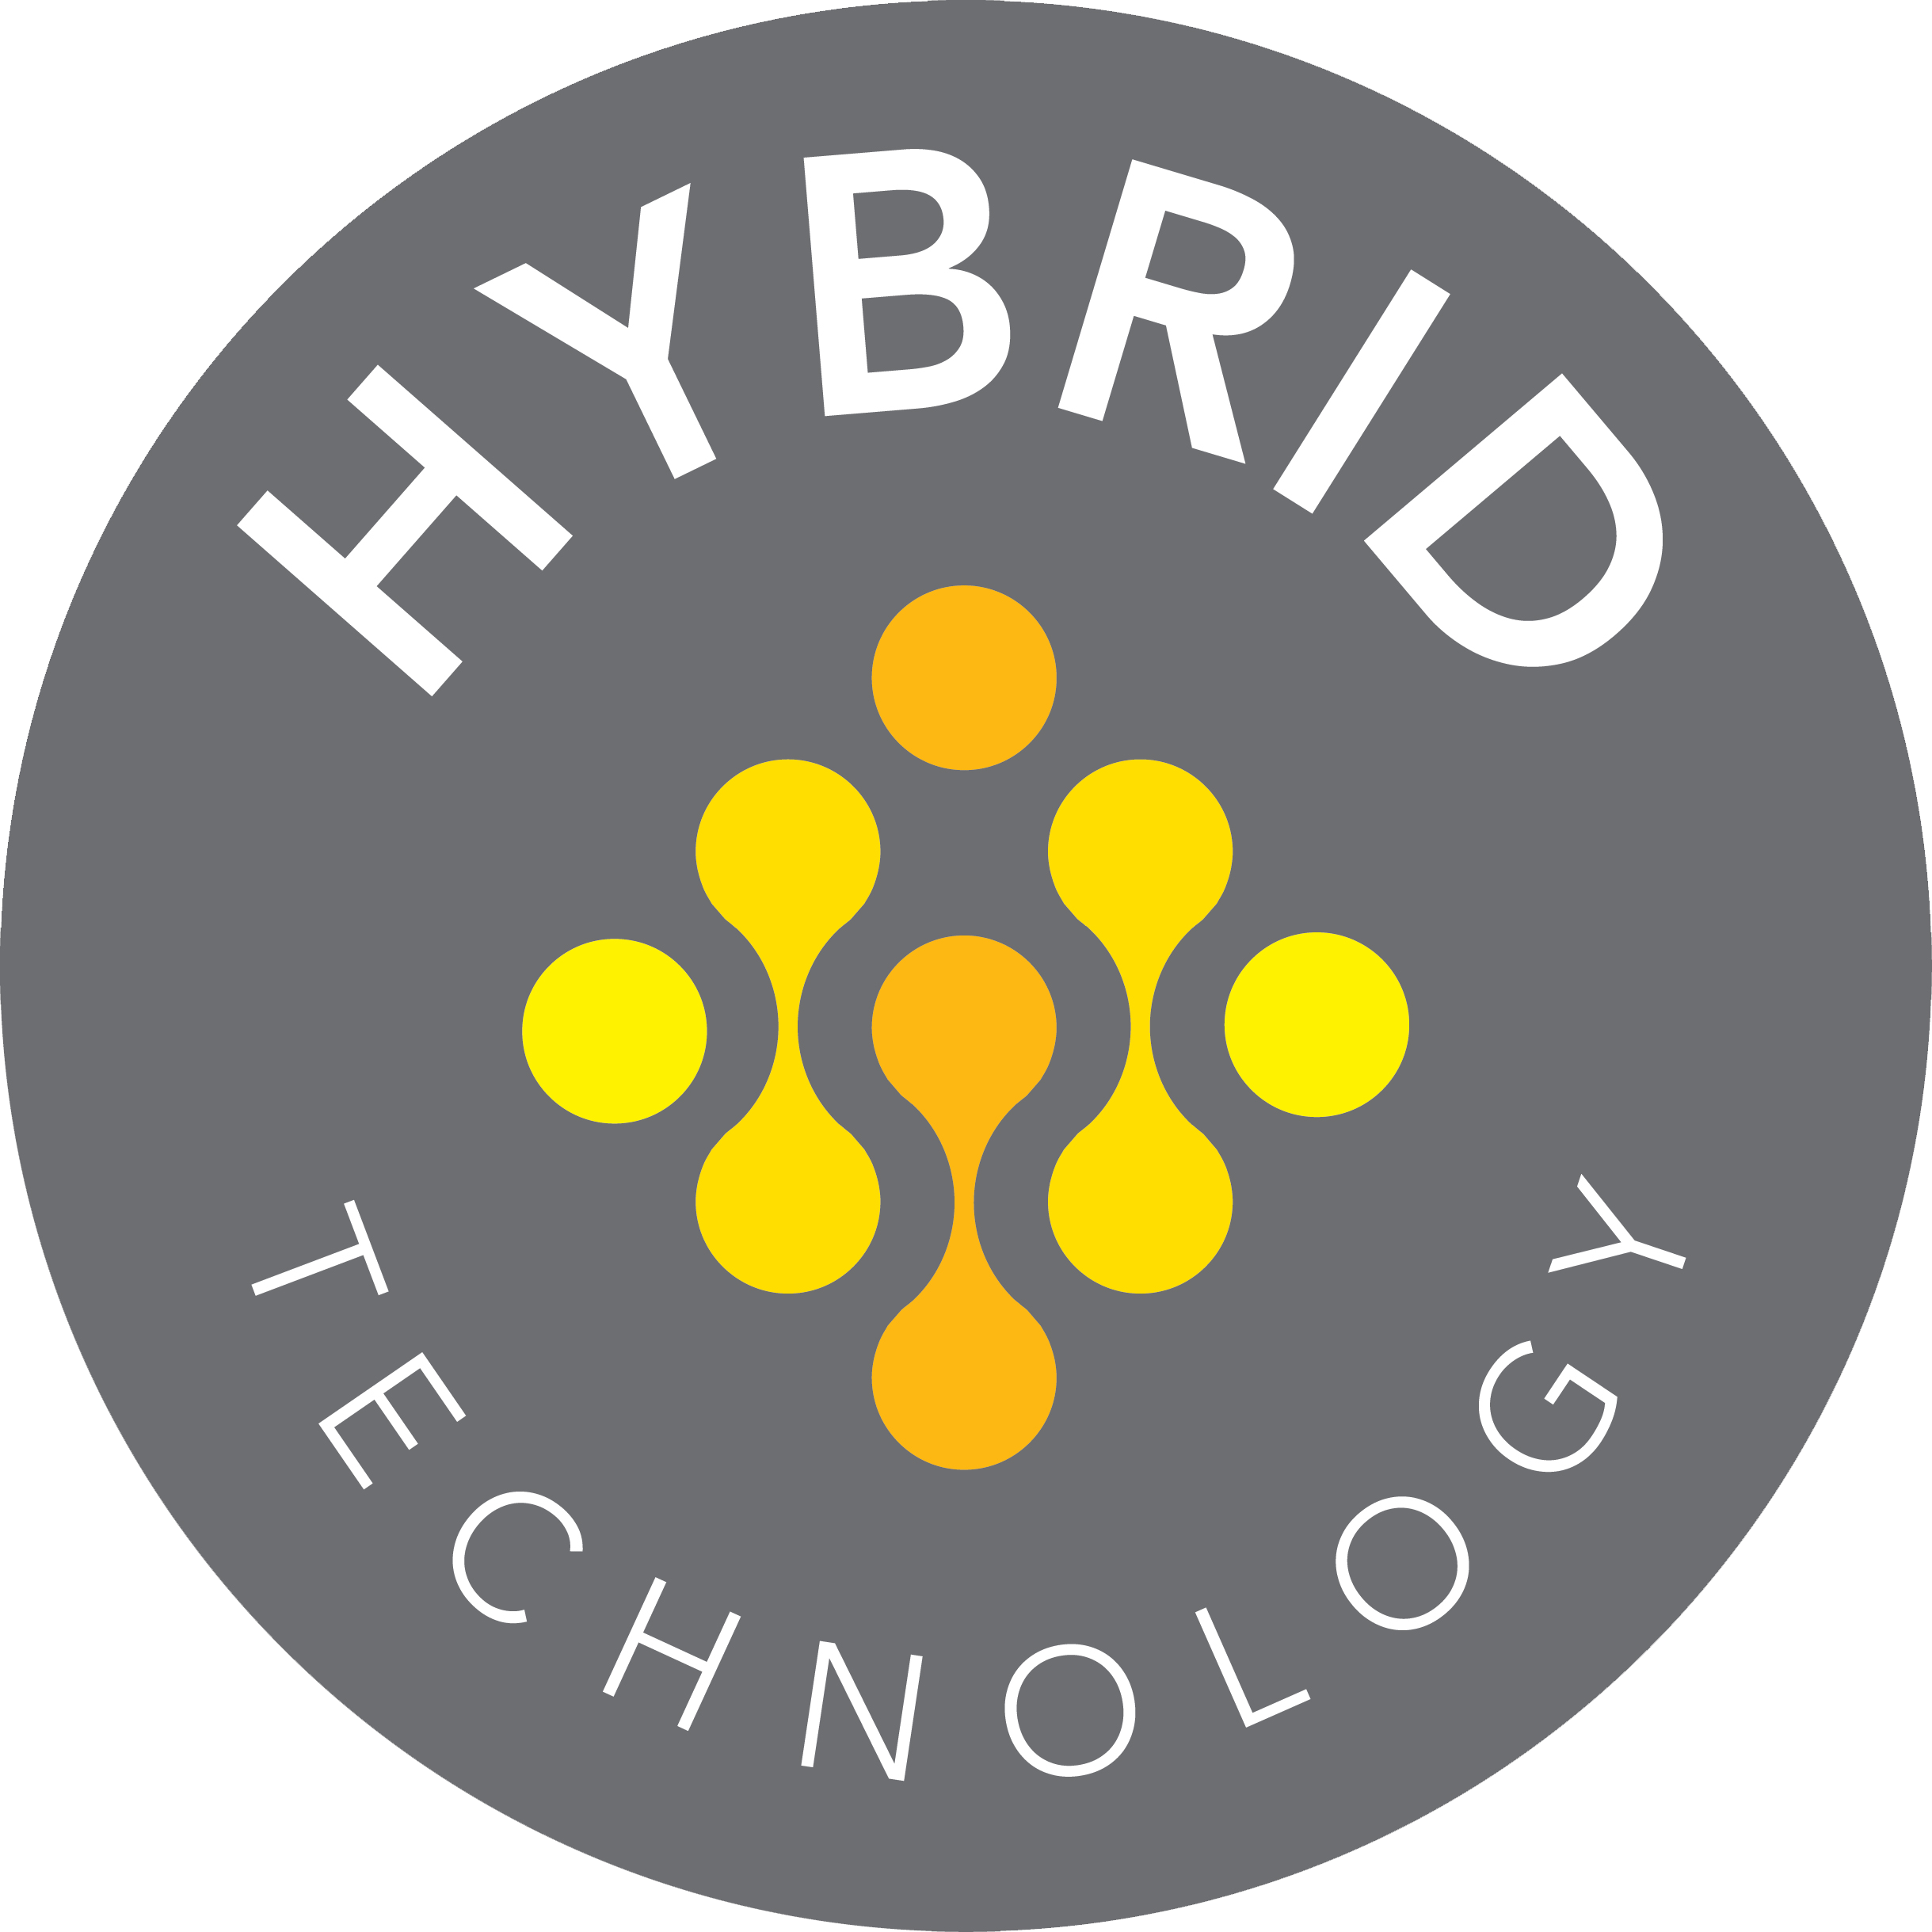 Hybrid technology